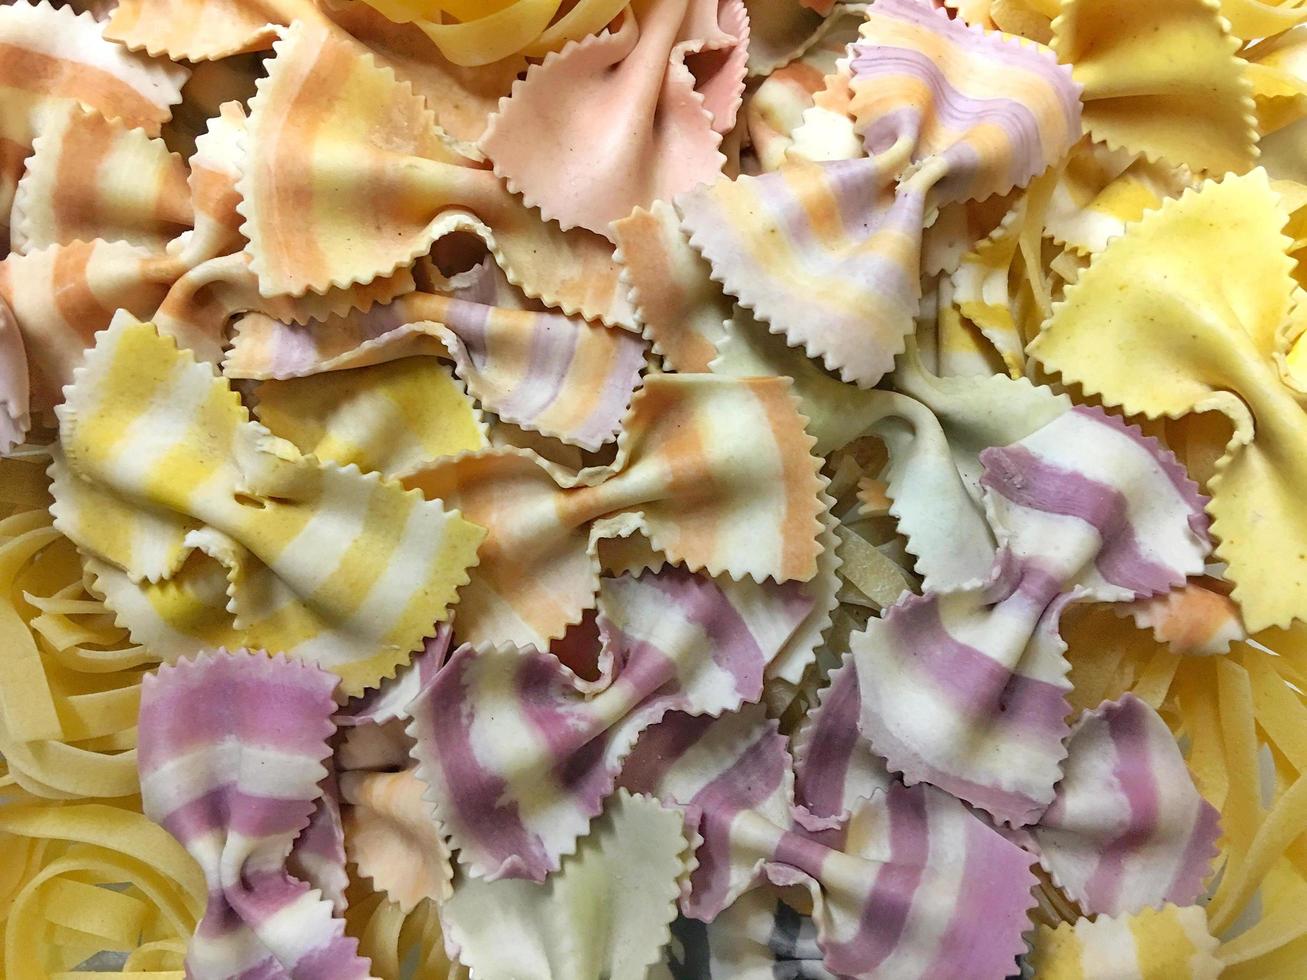 italiaanse macaroni pasta ongekookt rauw voedsel foto